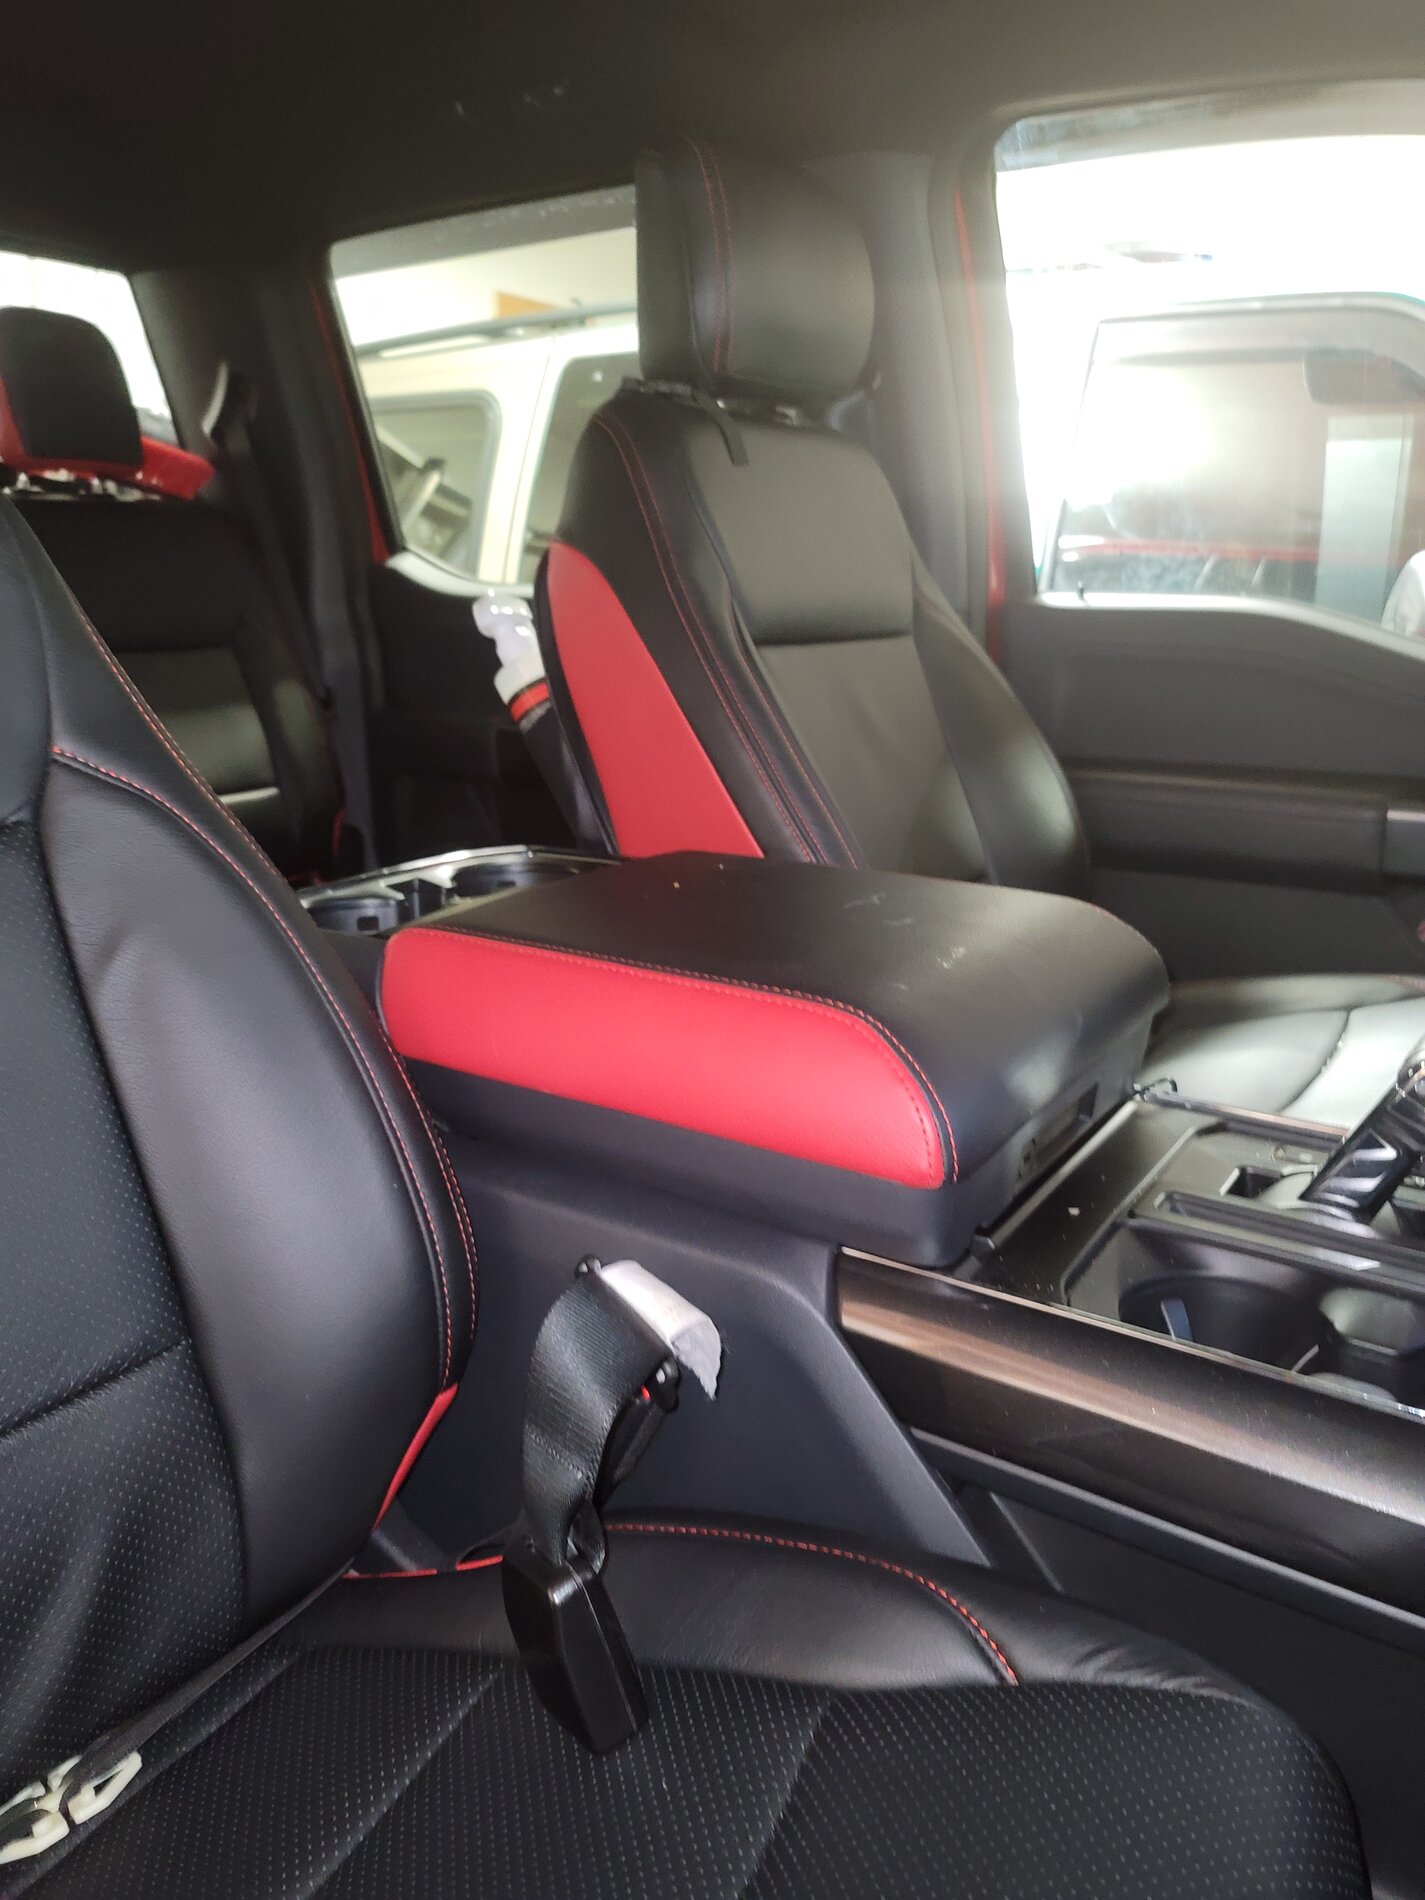 Ford F-150 Katzkin seat covers (Black & Red) in my 2021 F-150 XLT 20210223_101141 (1)